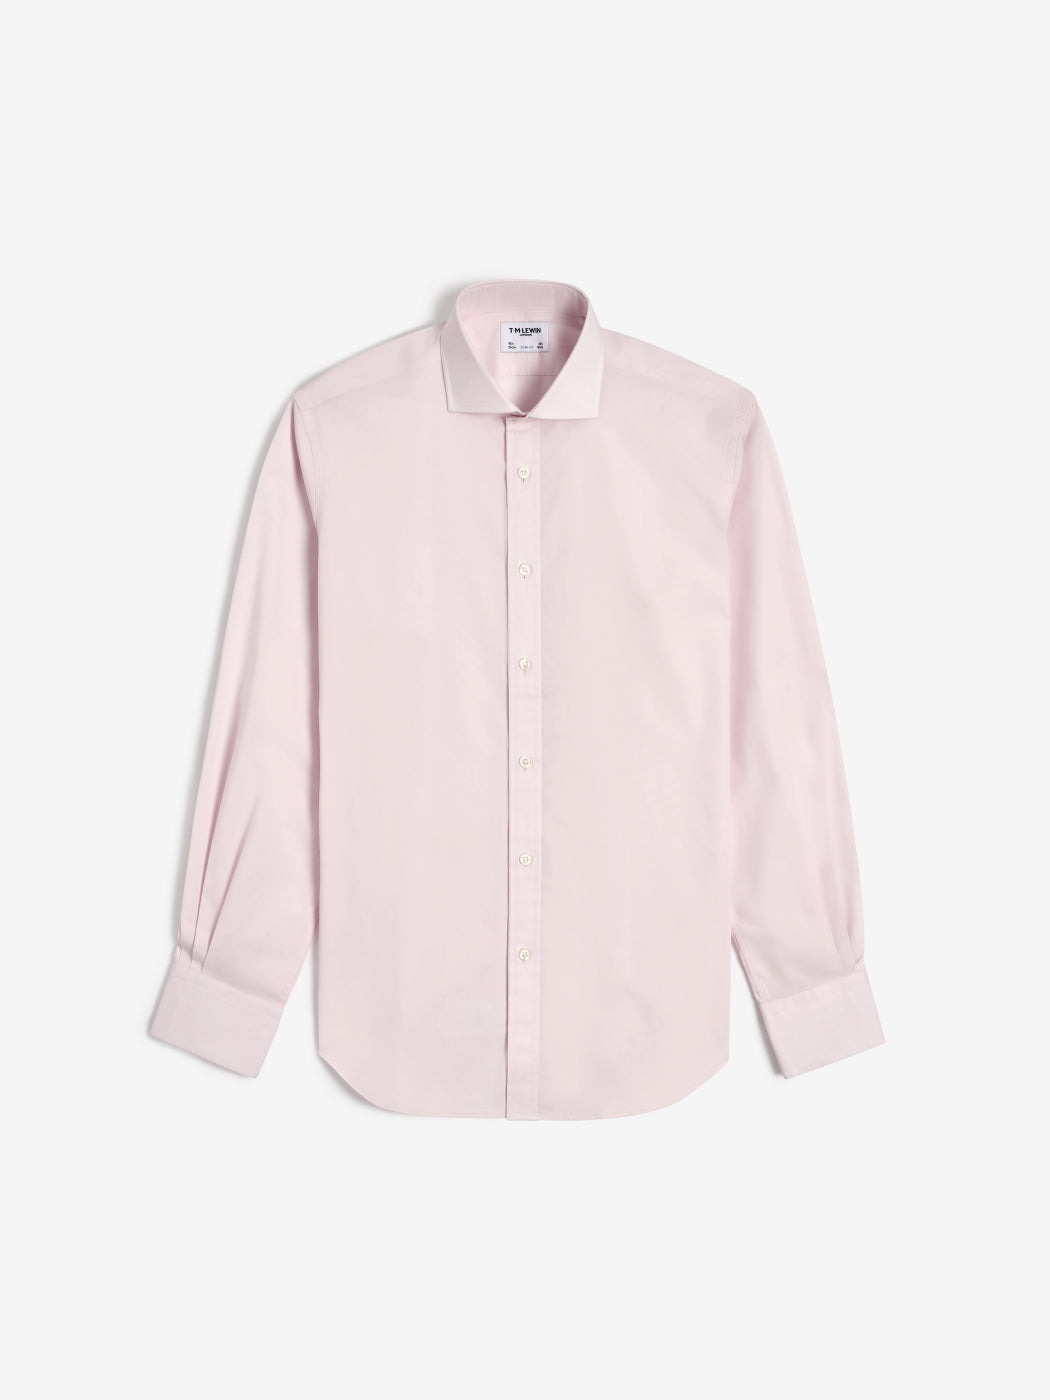 Image 3 of Non-Iron Pink Chevron Stripe Twill Fitted Single Cuff Classic Collar Shirt